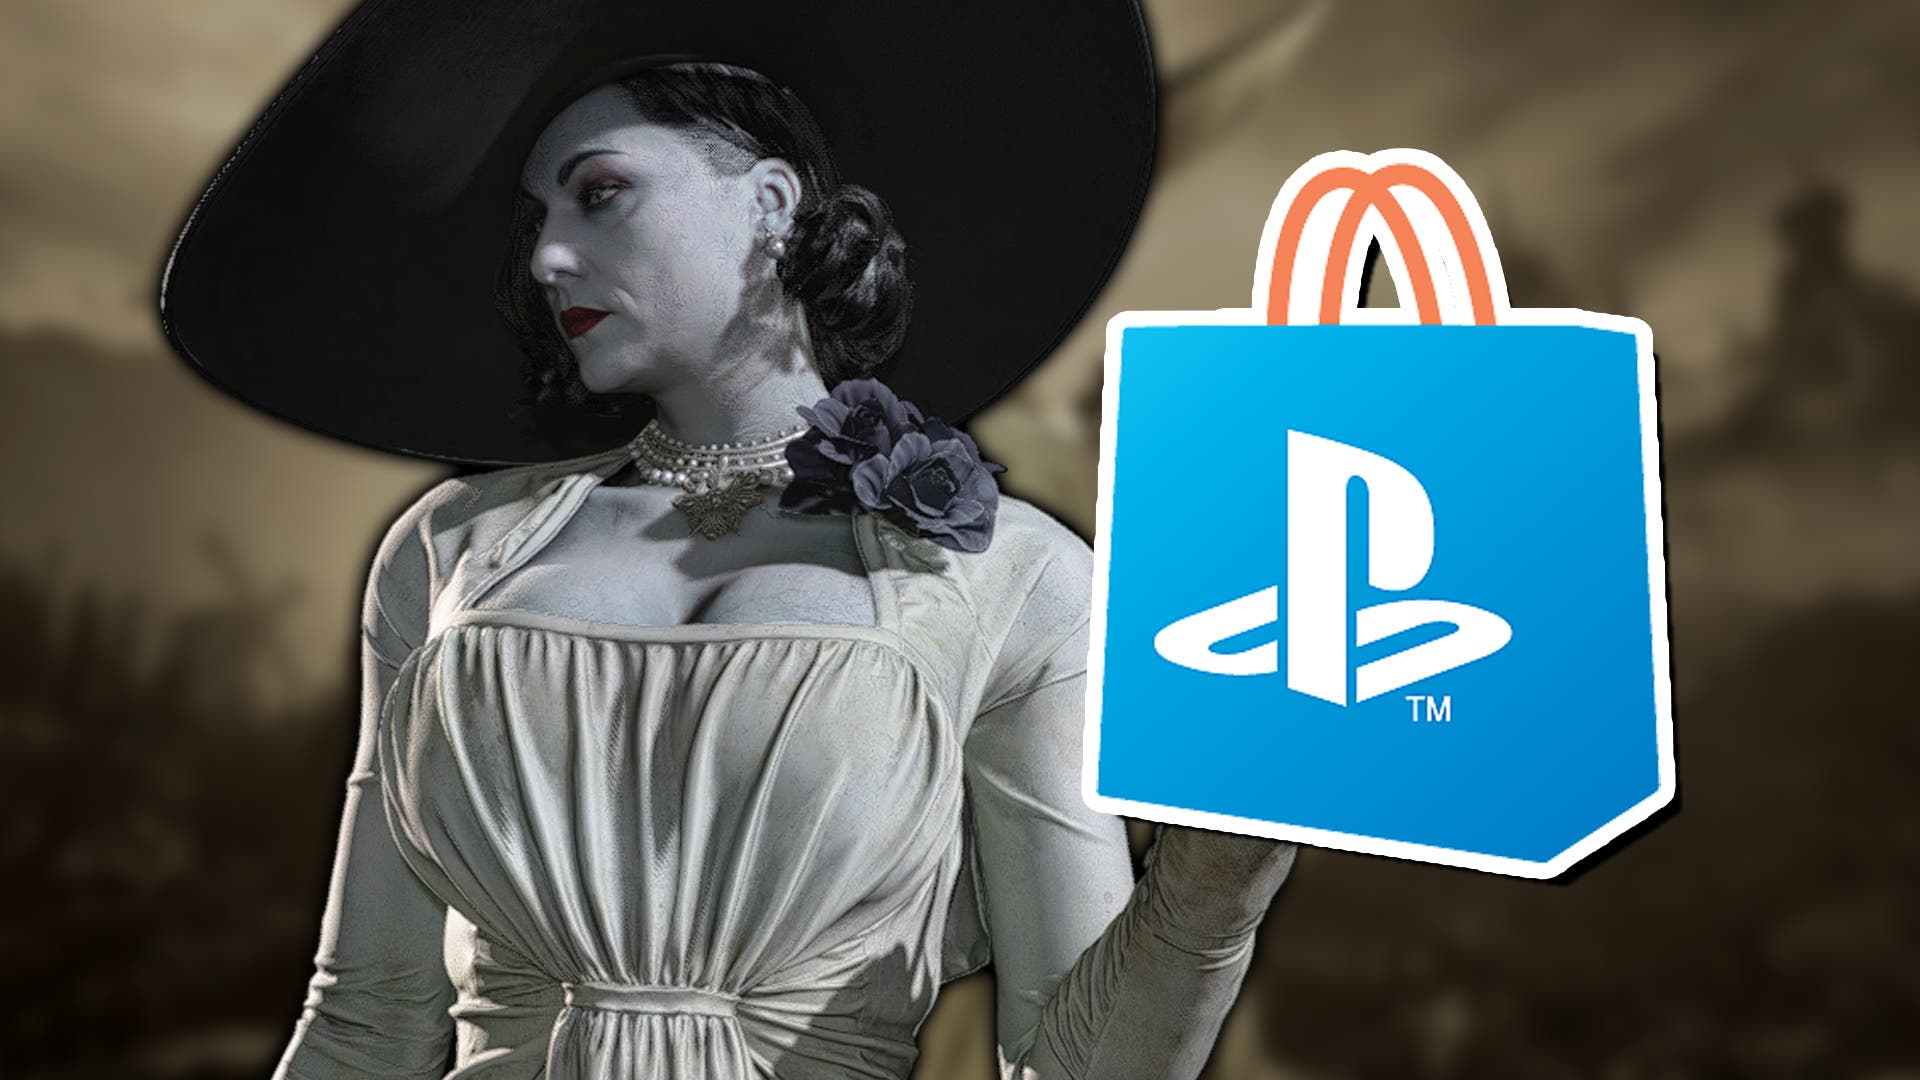 Resident Evil Village podría llegar a PS4 y Xbox One